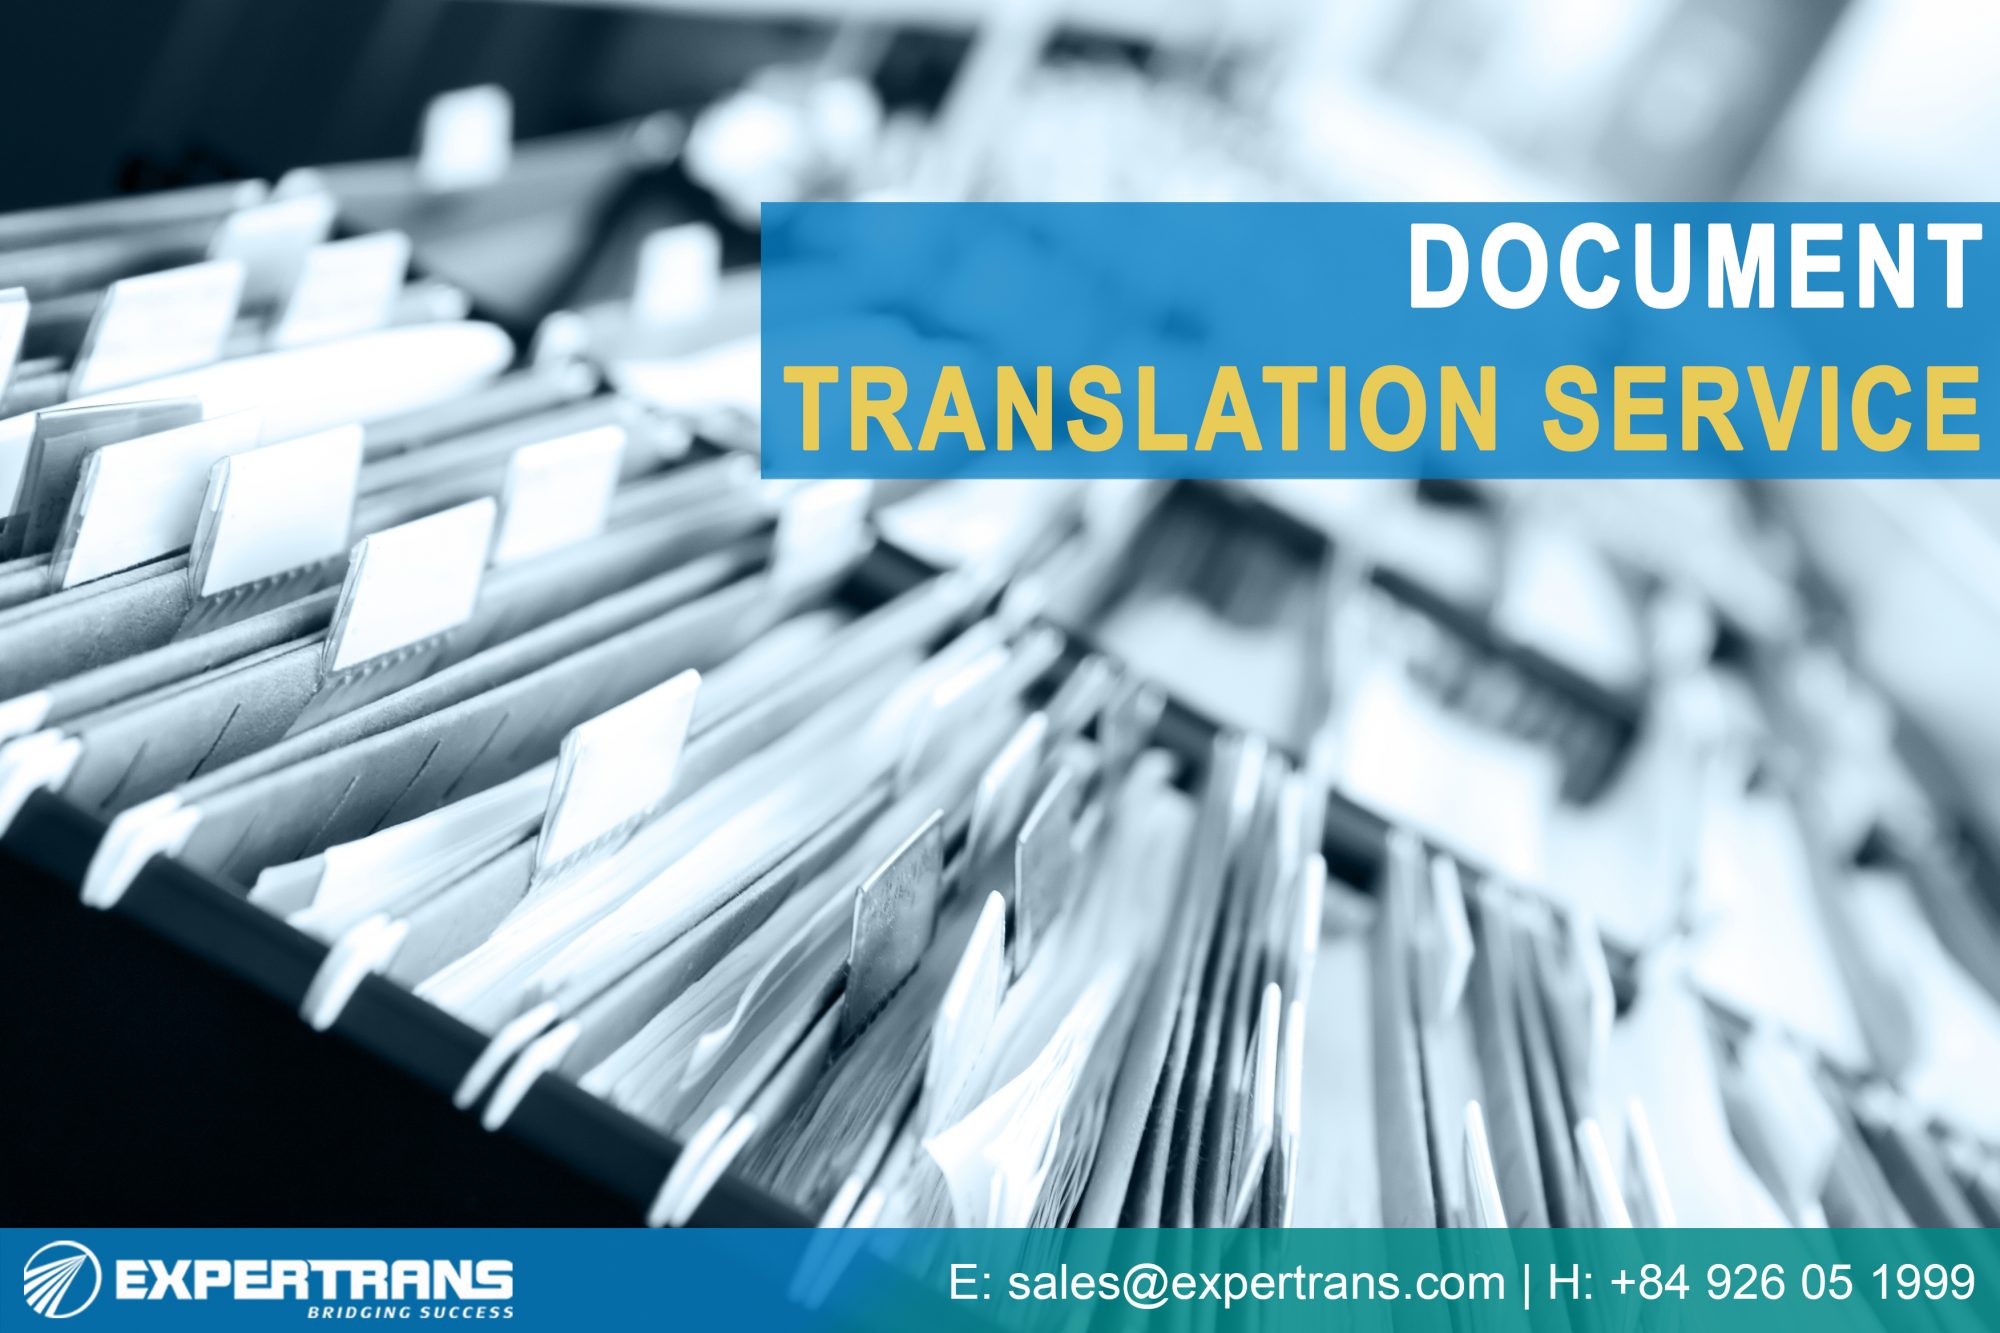 Document Translation Service